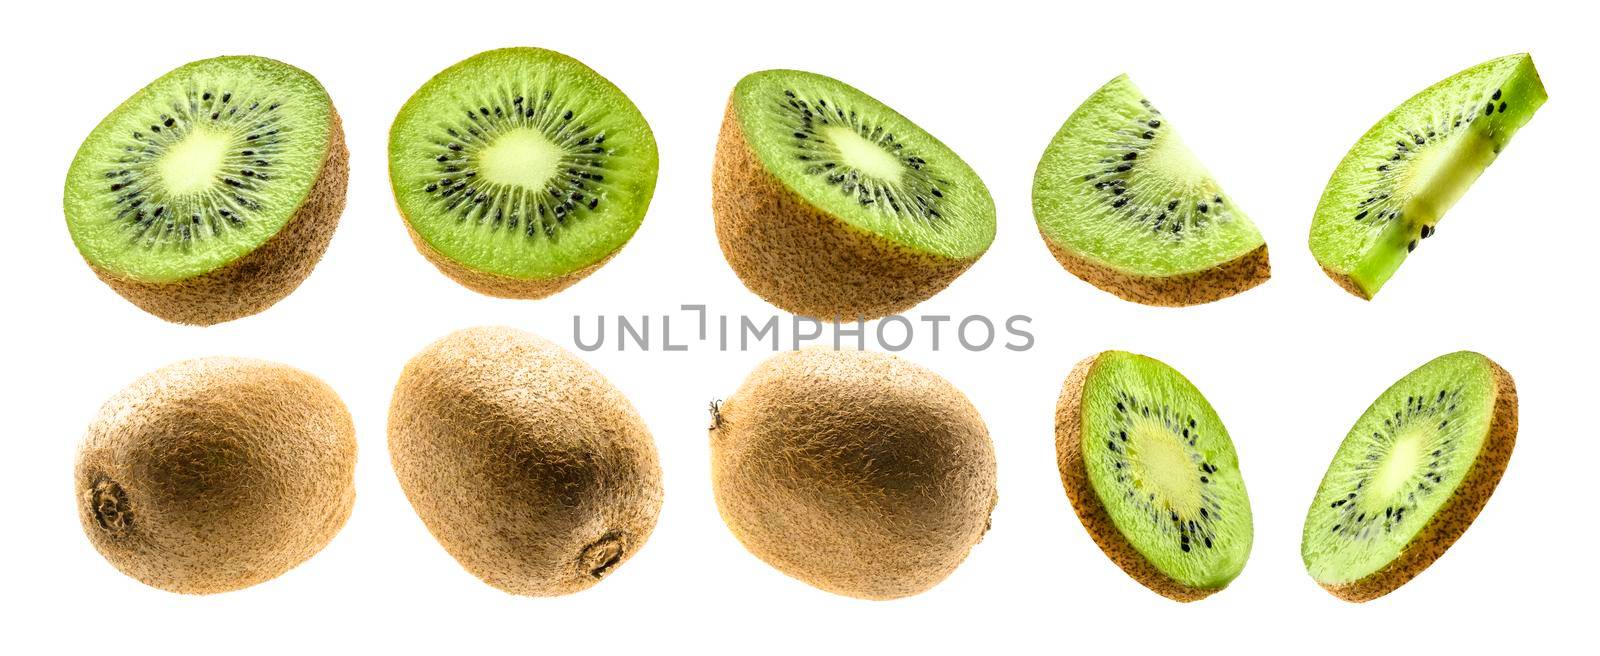 Kiwi fruit levitating on a white background by butenkow